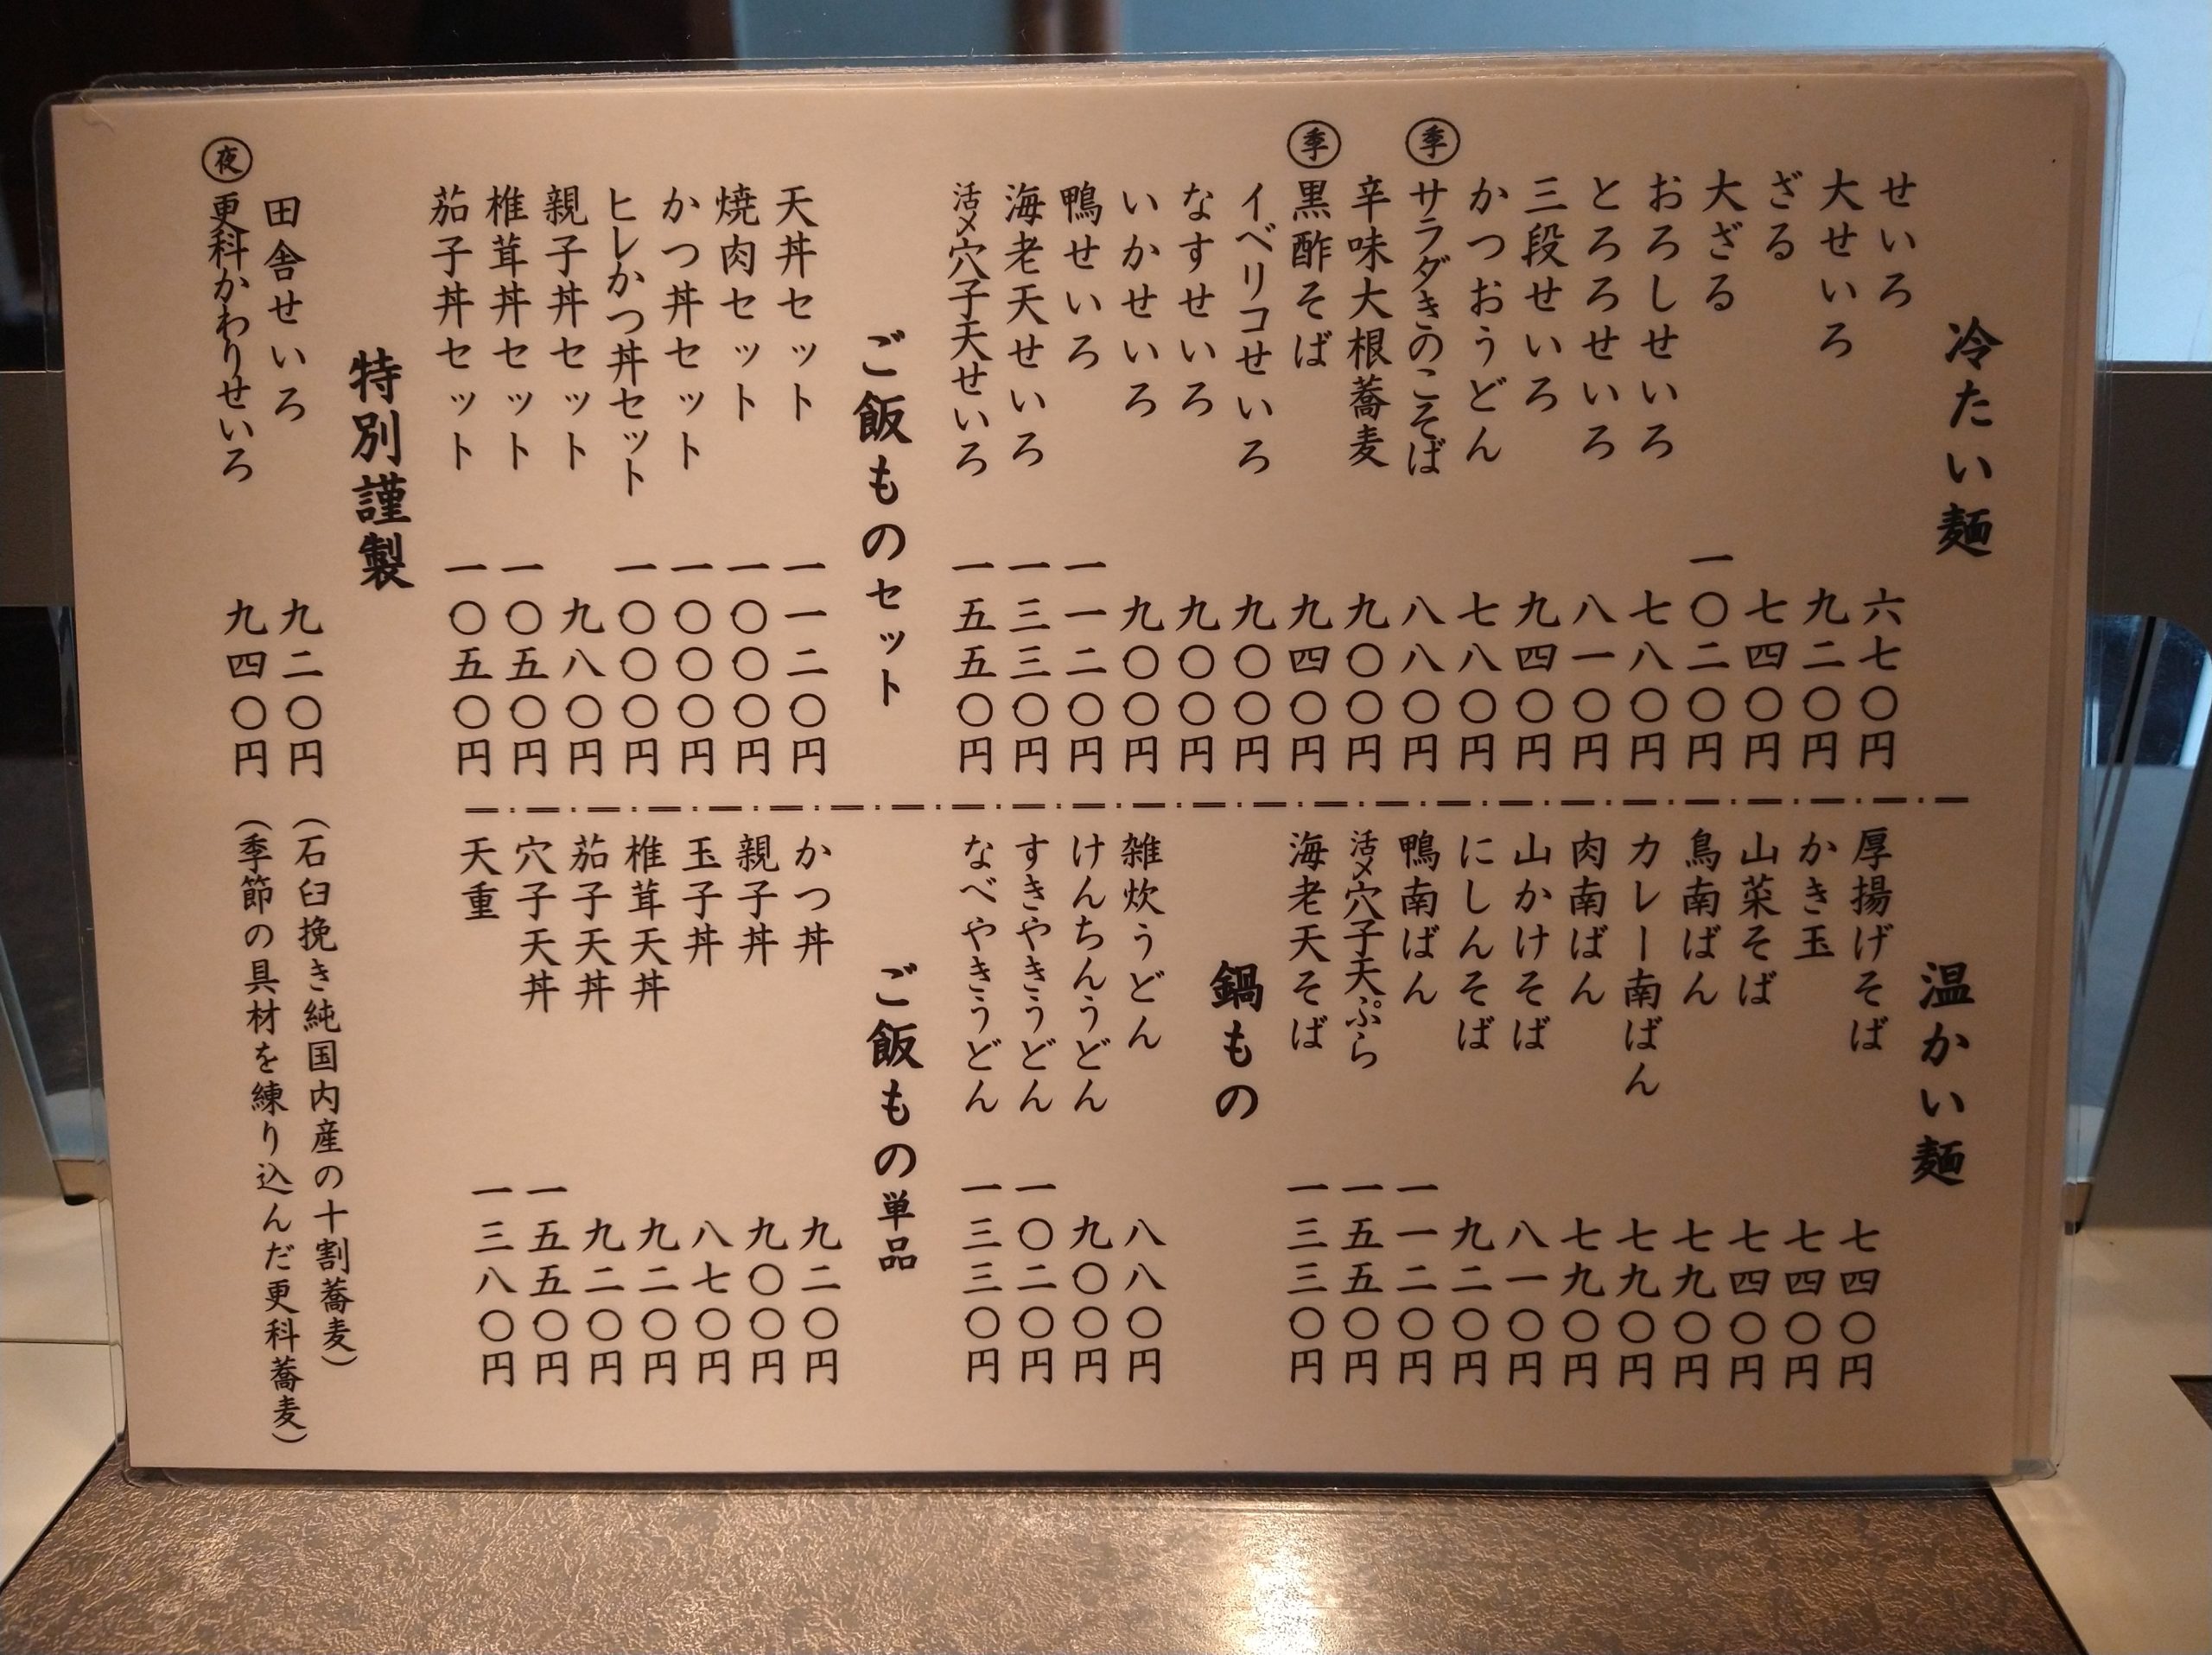 yabusen-kanda-menu-02